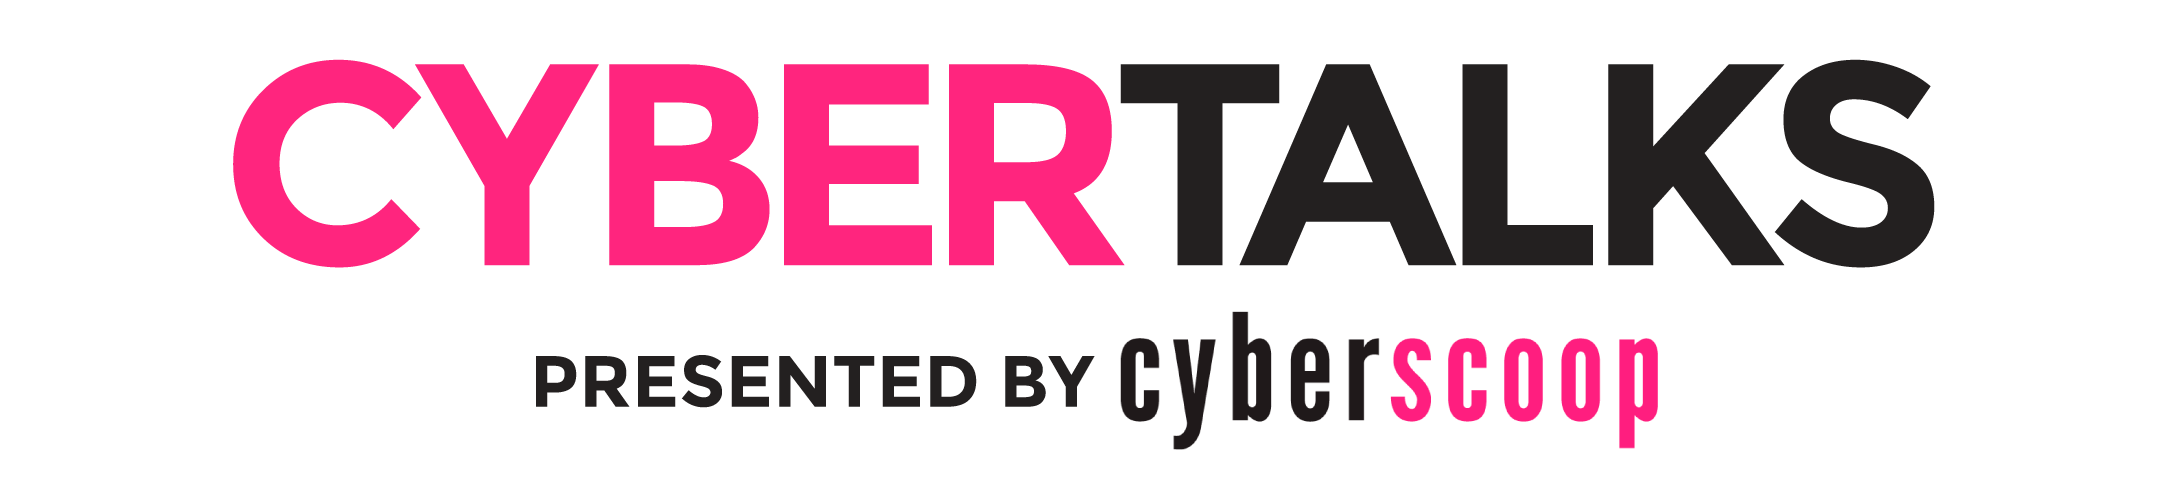 CyberTalks logo